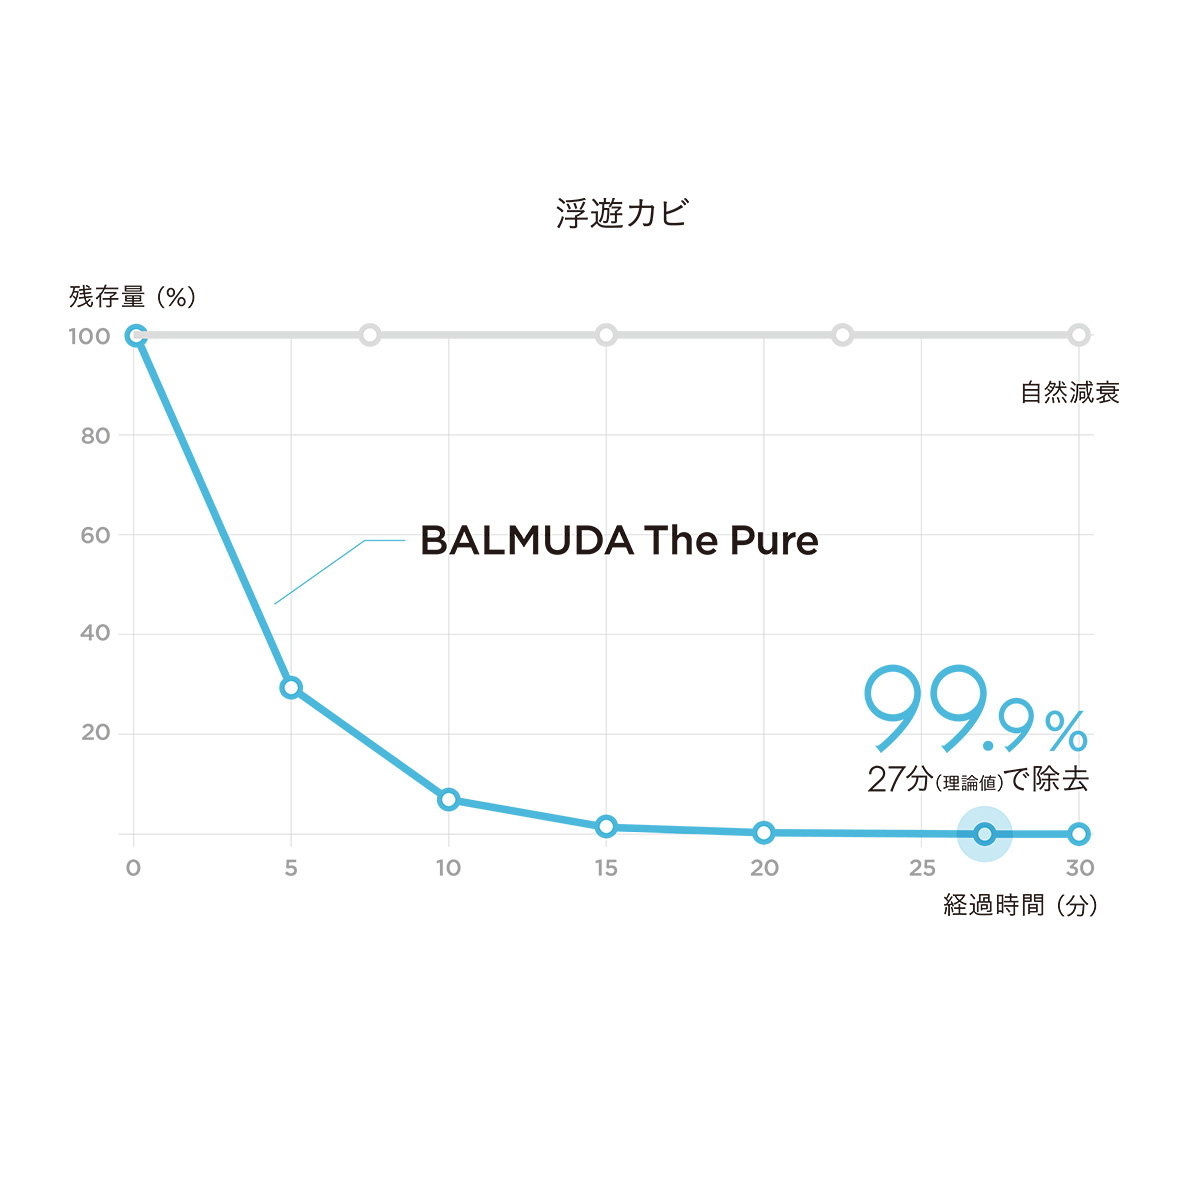 「BALMUDA The Pure」 ザ・ピュア 空気清浄機 ダークグレー